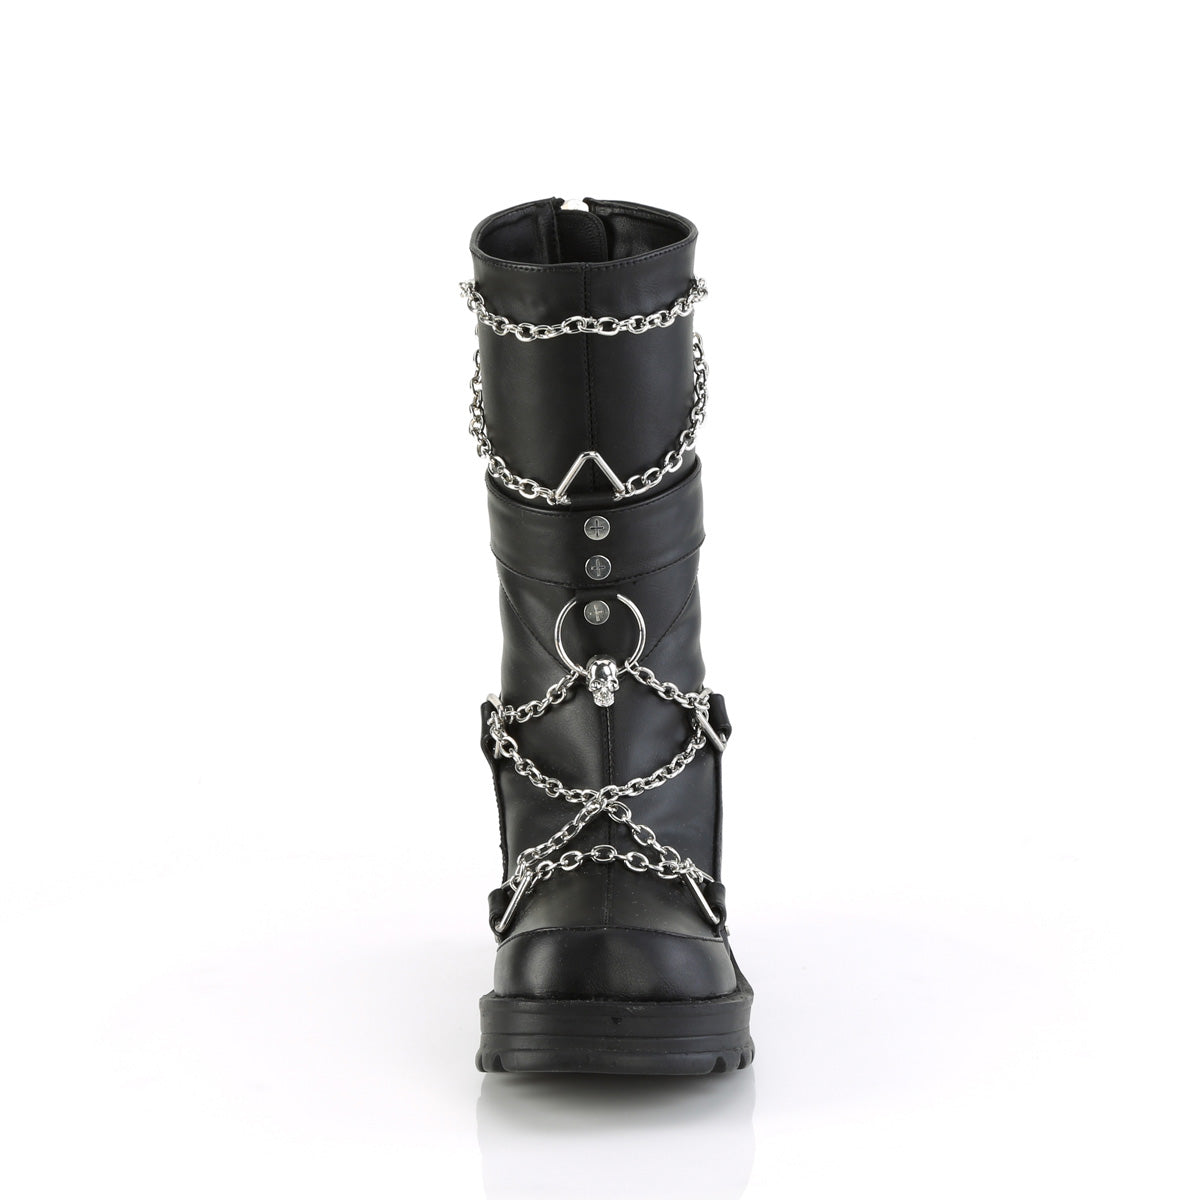 BRATTY-120 Demonia Black Vegan Leather Women's Mid-Calf & Knee High Boots [Demonia Cult Alternative Footwear]